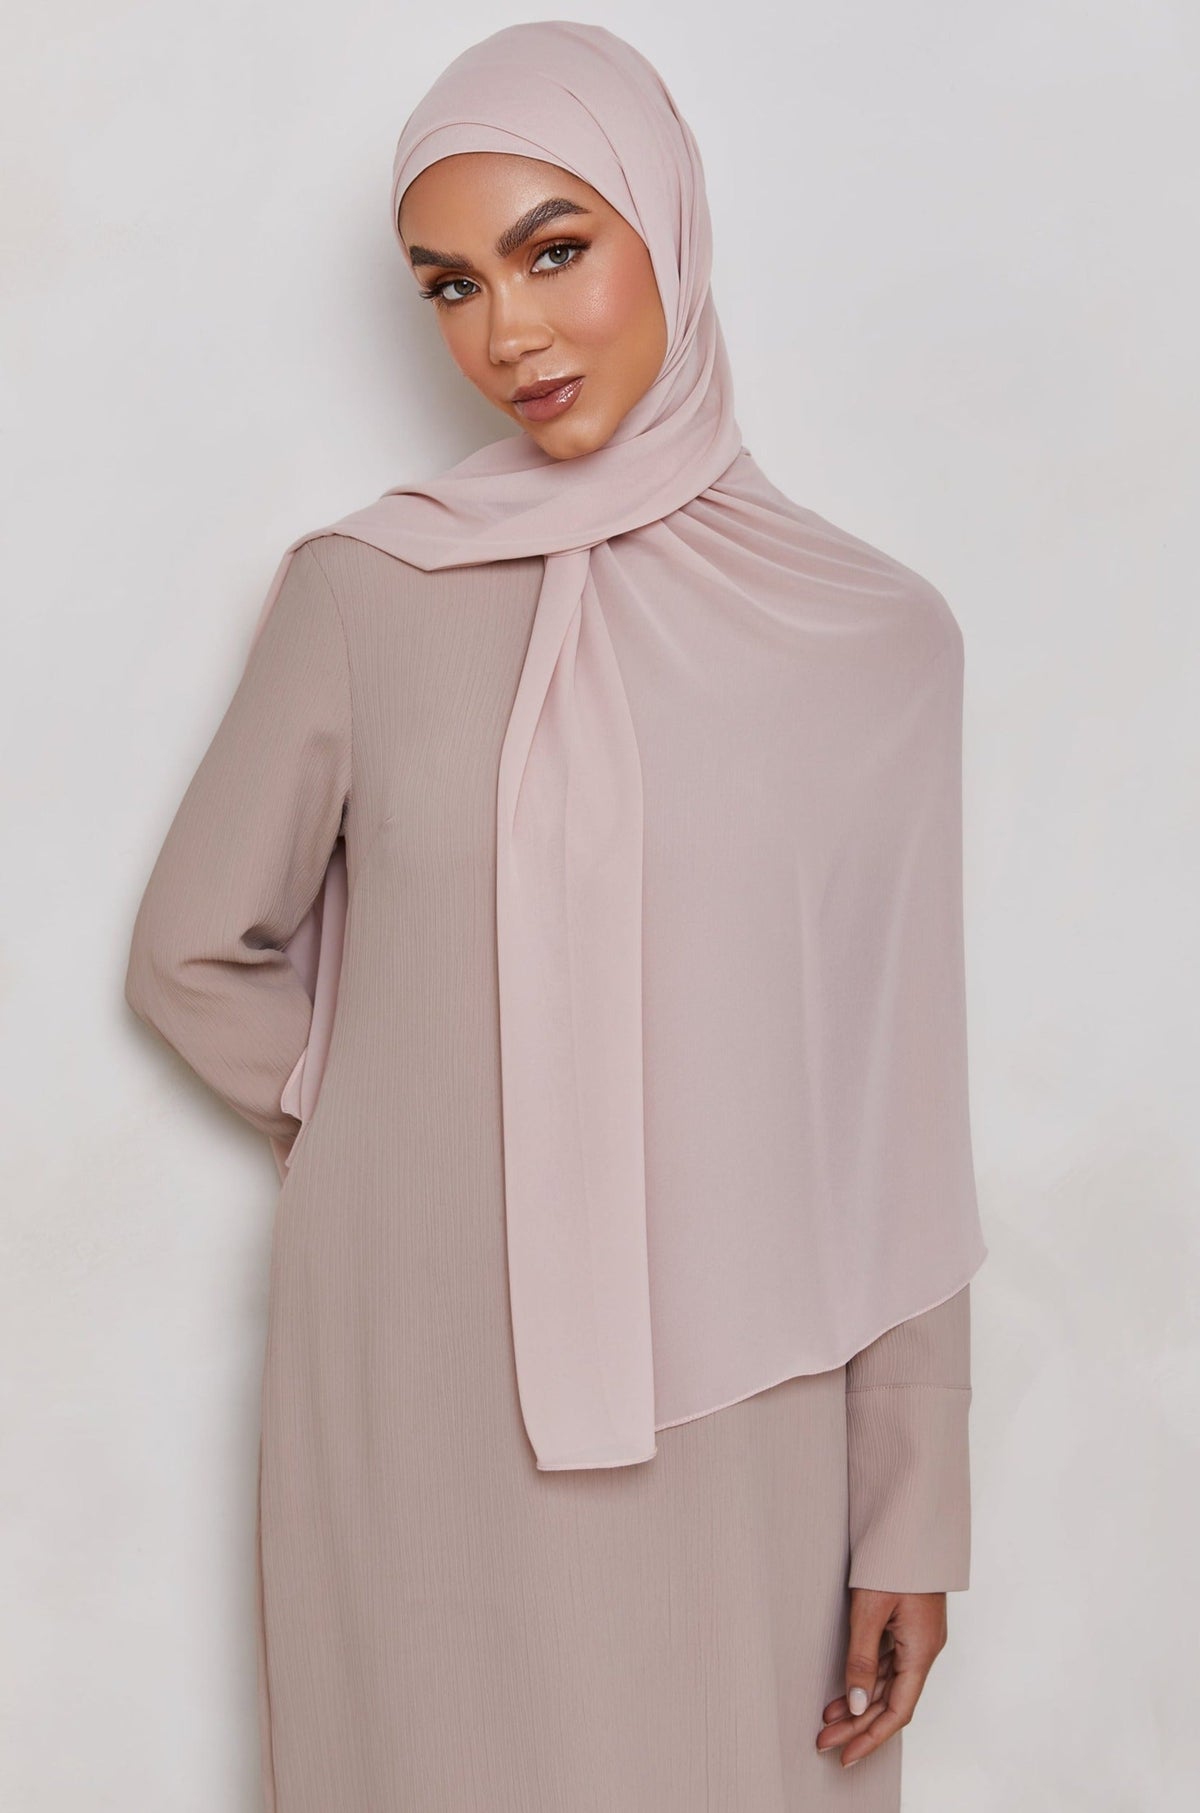 Chiffon LITE Hijab - Sepia Rose Veiled 